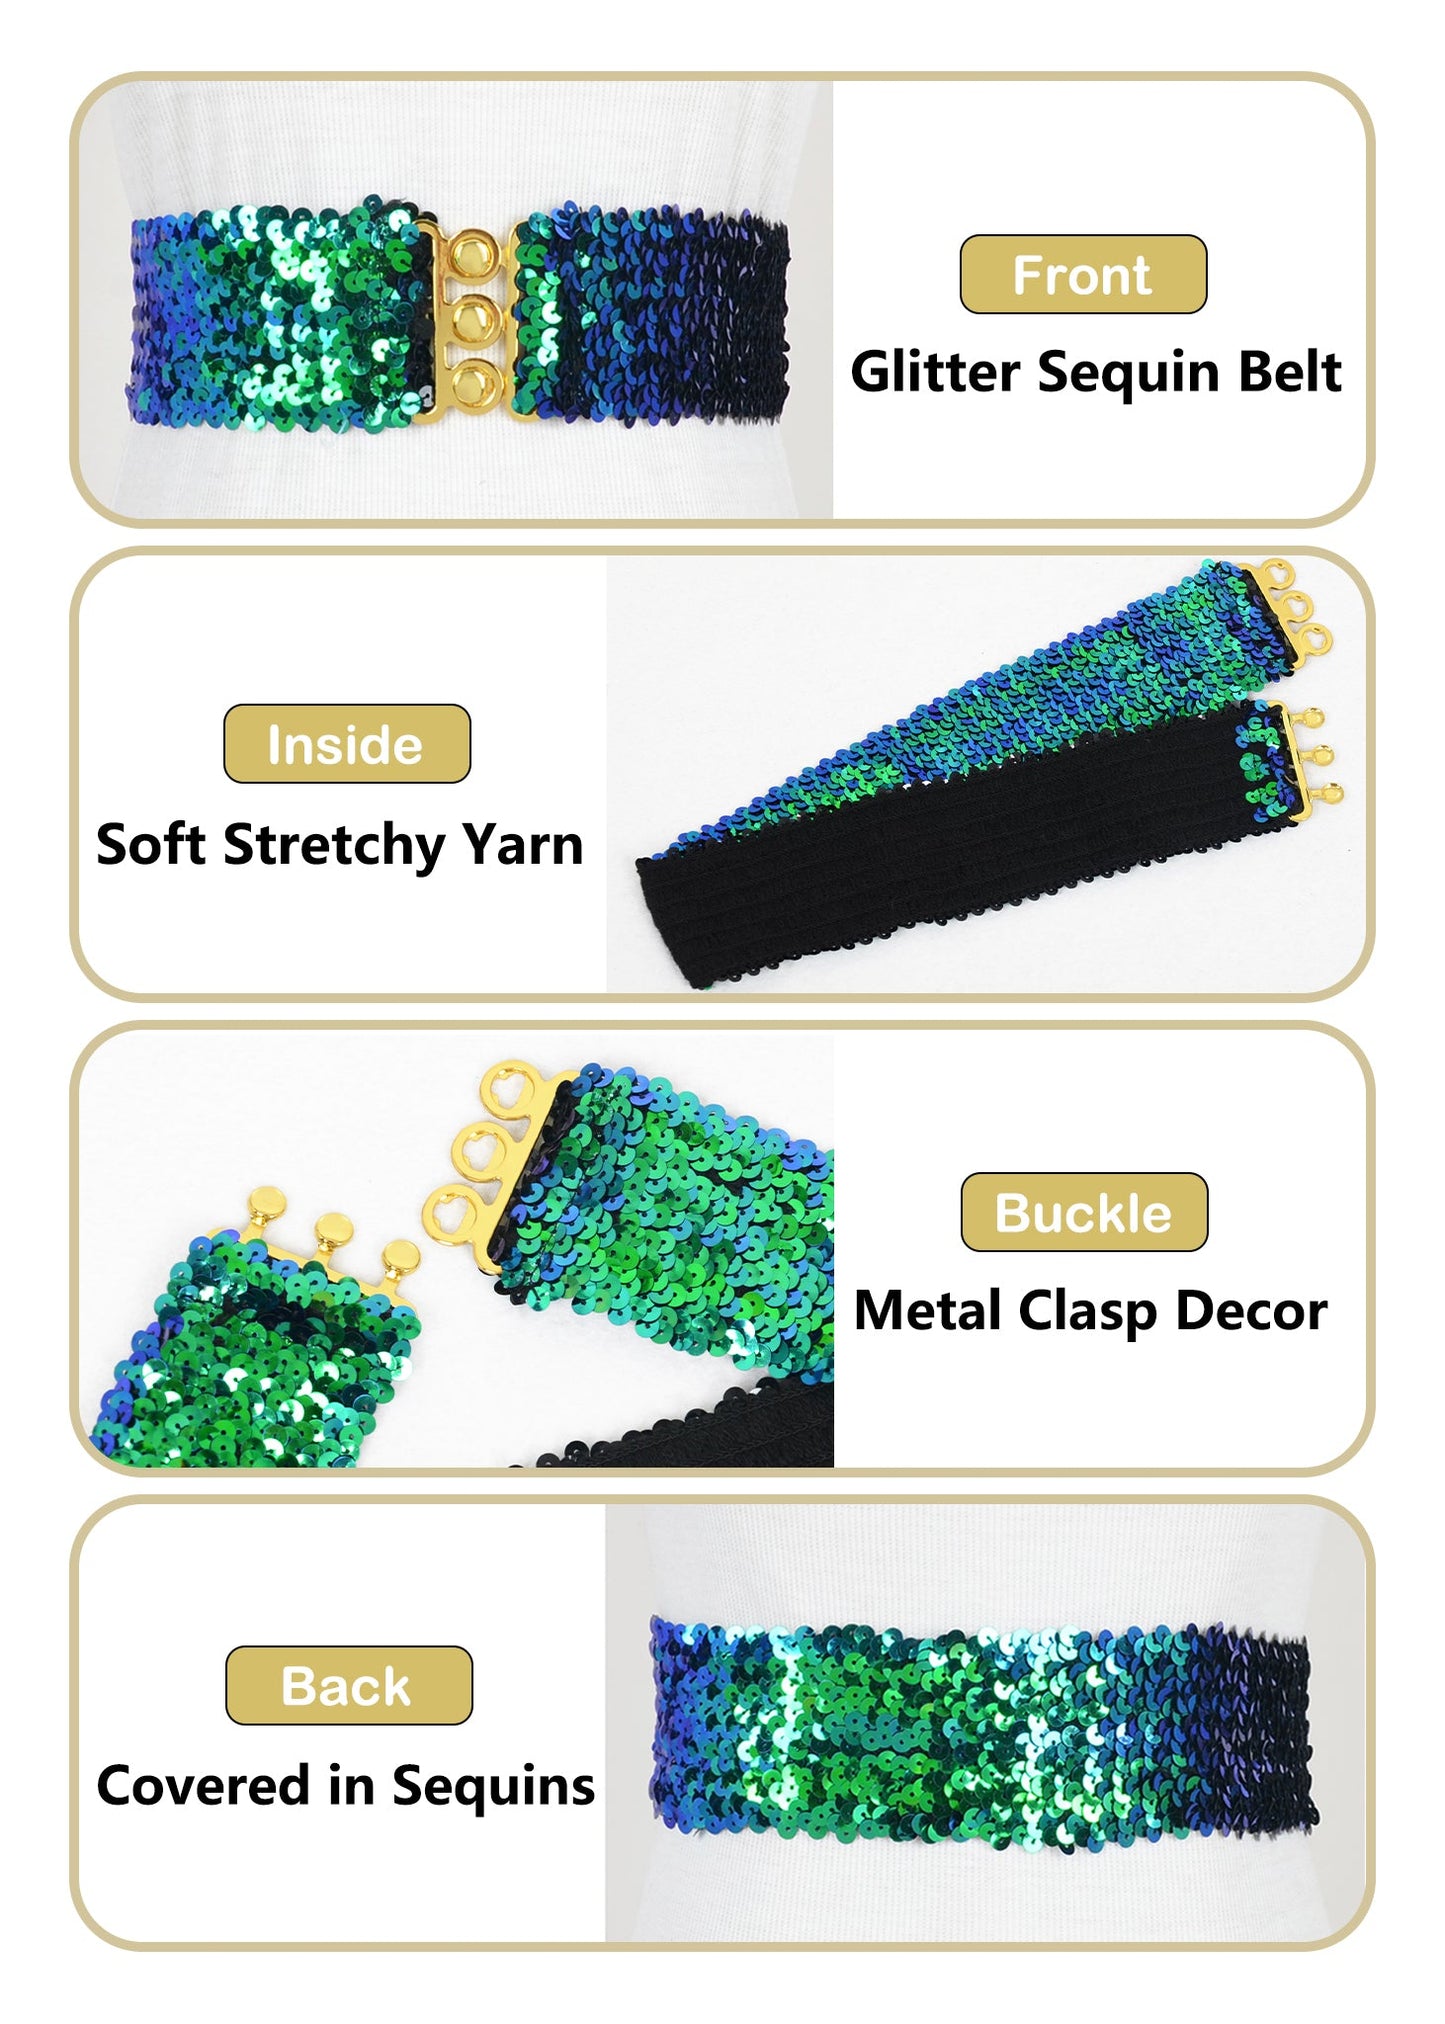 Anna-Kaci Women Glitter Sequin Belts Stretchy Sparkly Cinch Belt Disco Party Costume Elastic Waist Accessory